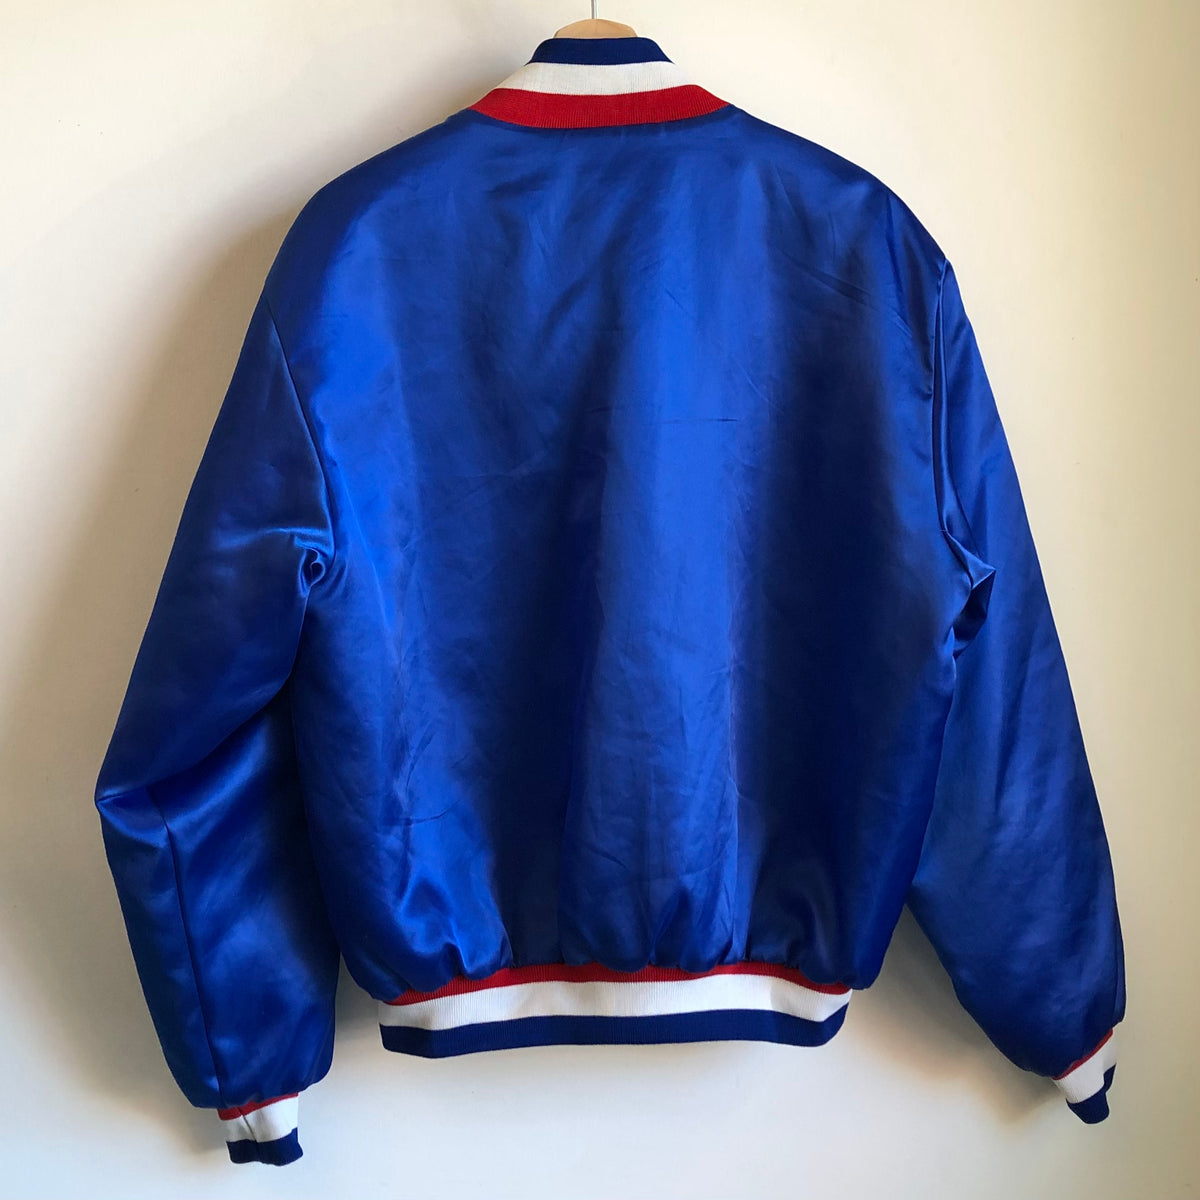 Vintage Chicago Cubs Satin Half Zip Pullover — Star Struck Vintage